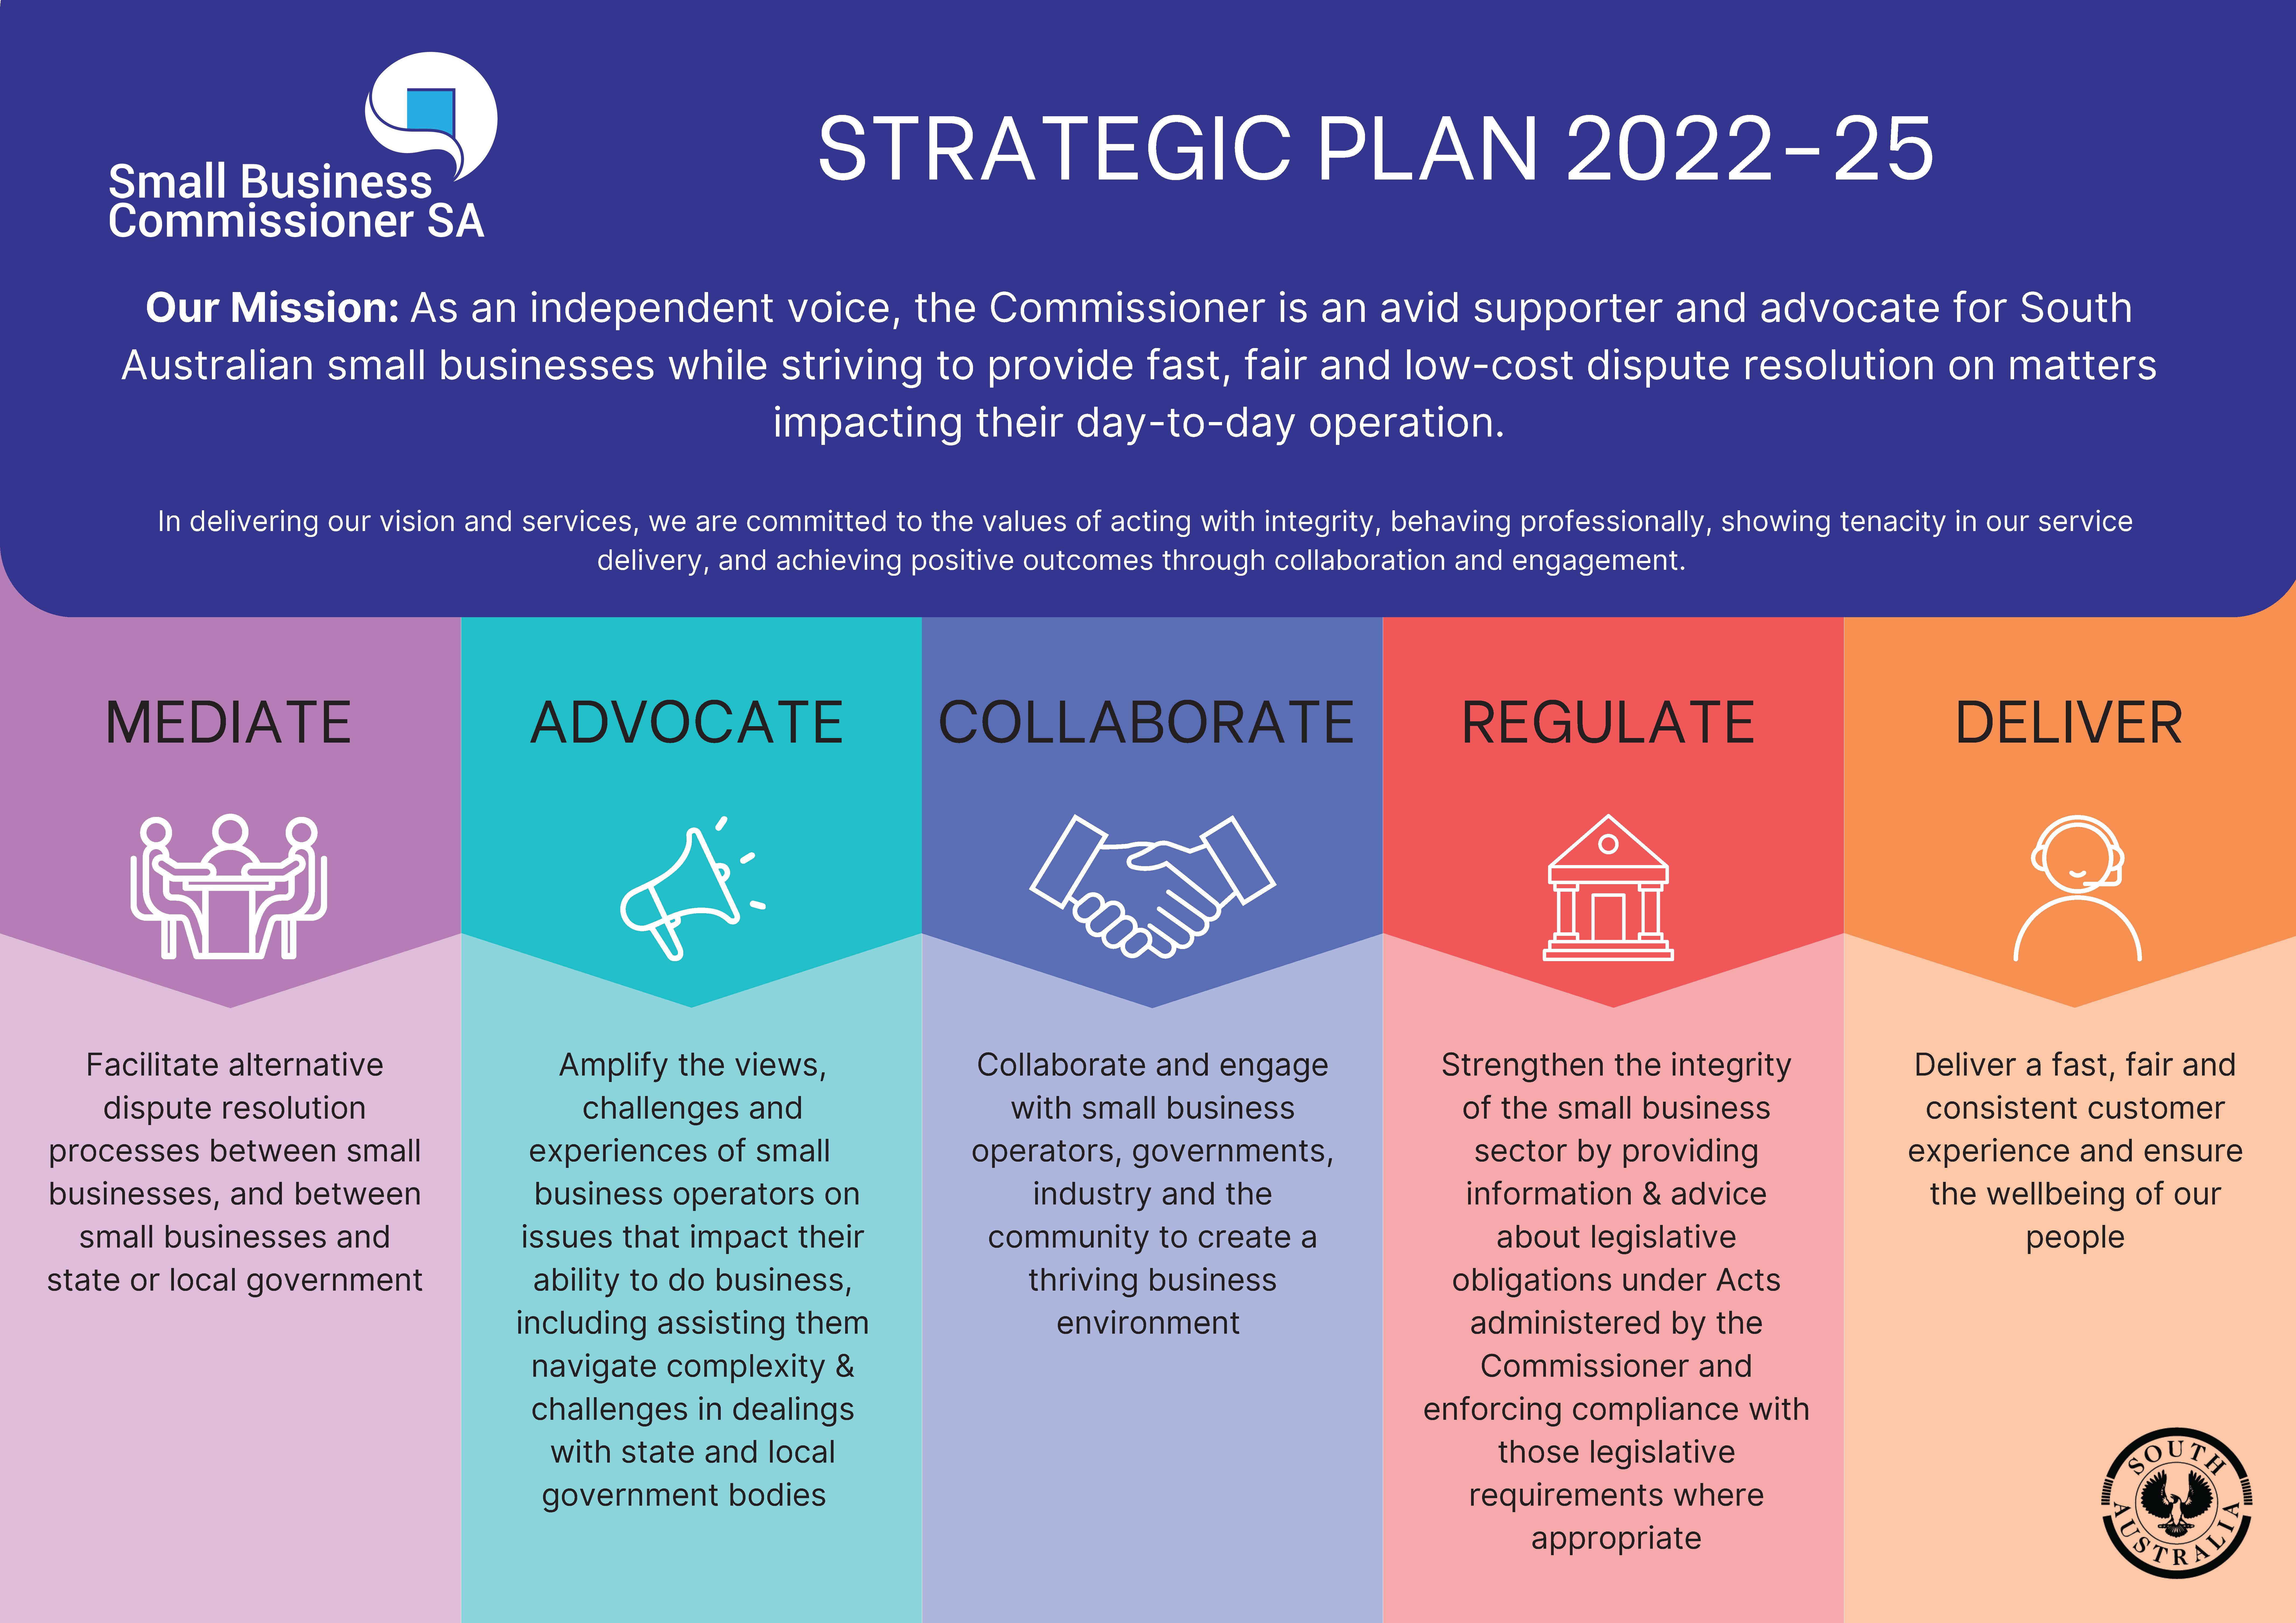 Small Business Commissioner SA's Strategic Plan 2022-25 - Mediate, Advocate, Collaborate, Regulate and Deliver. 